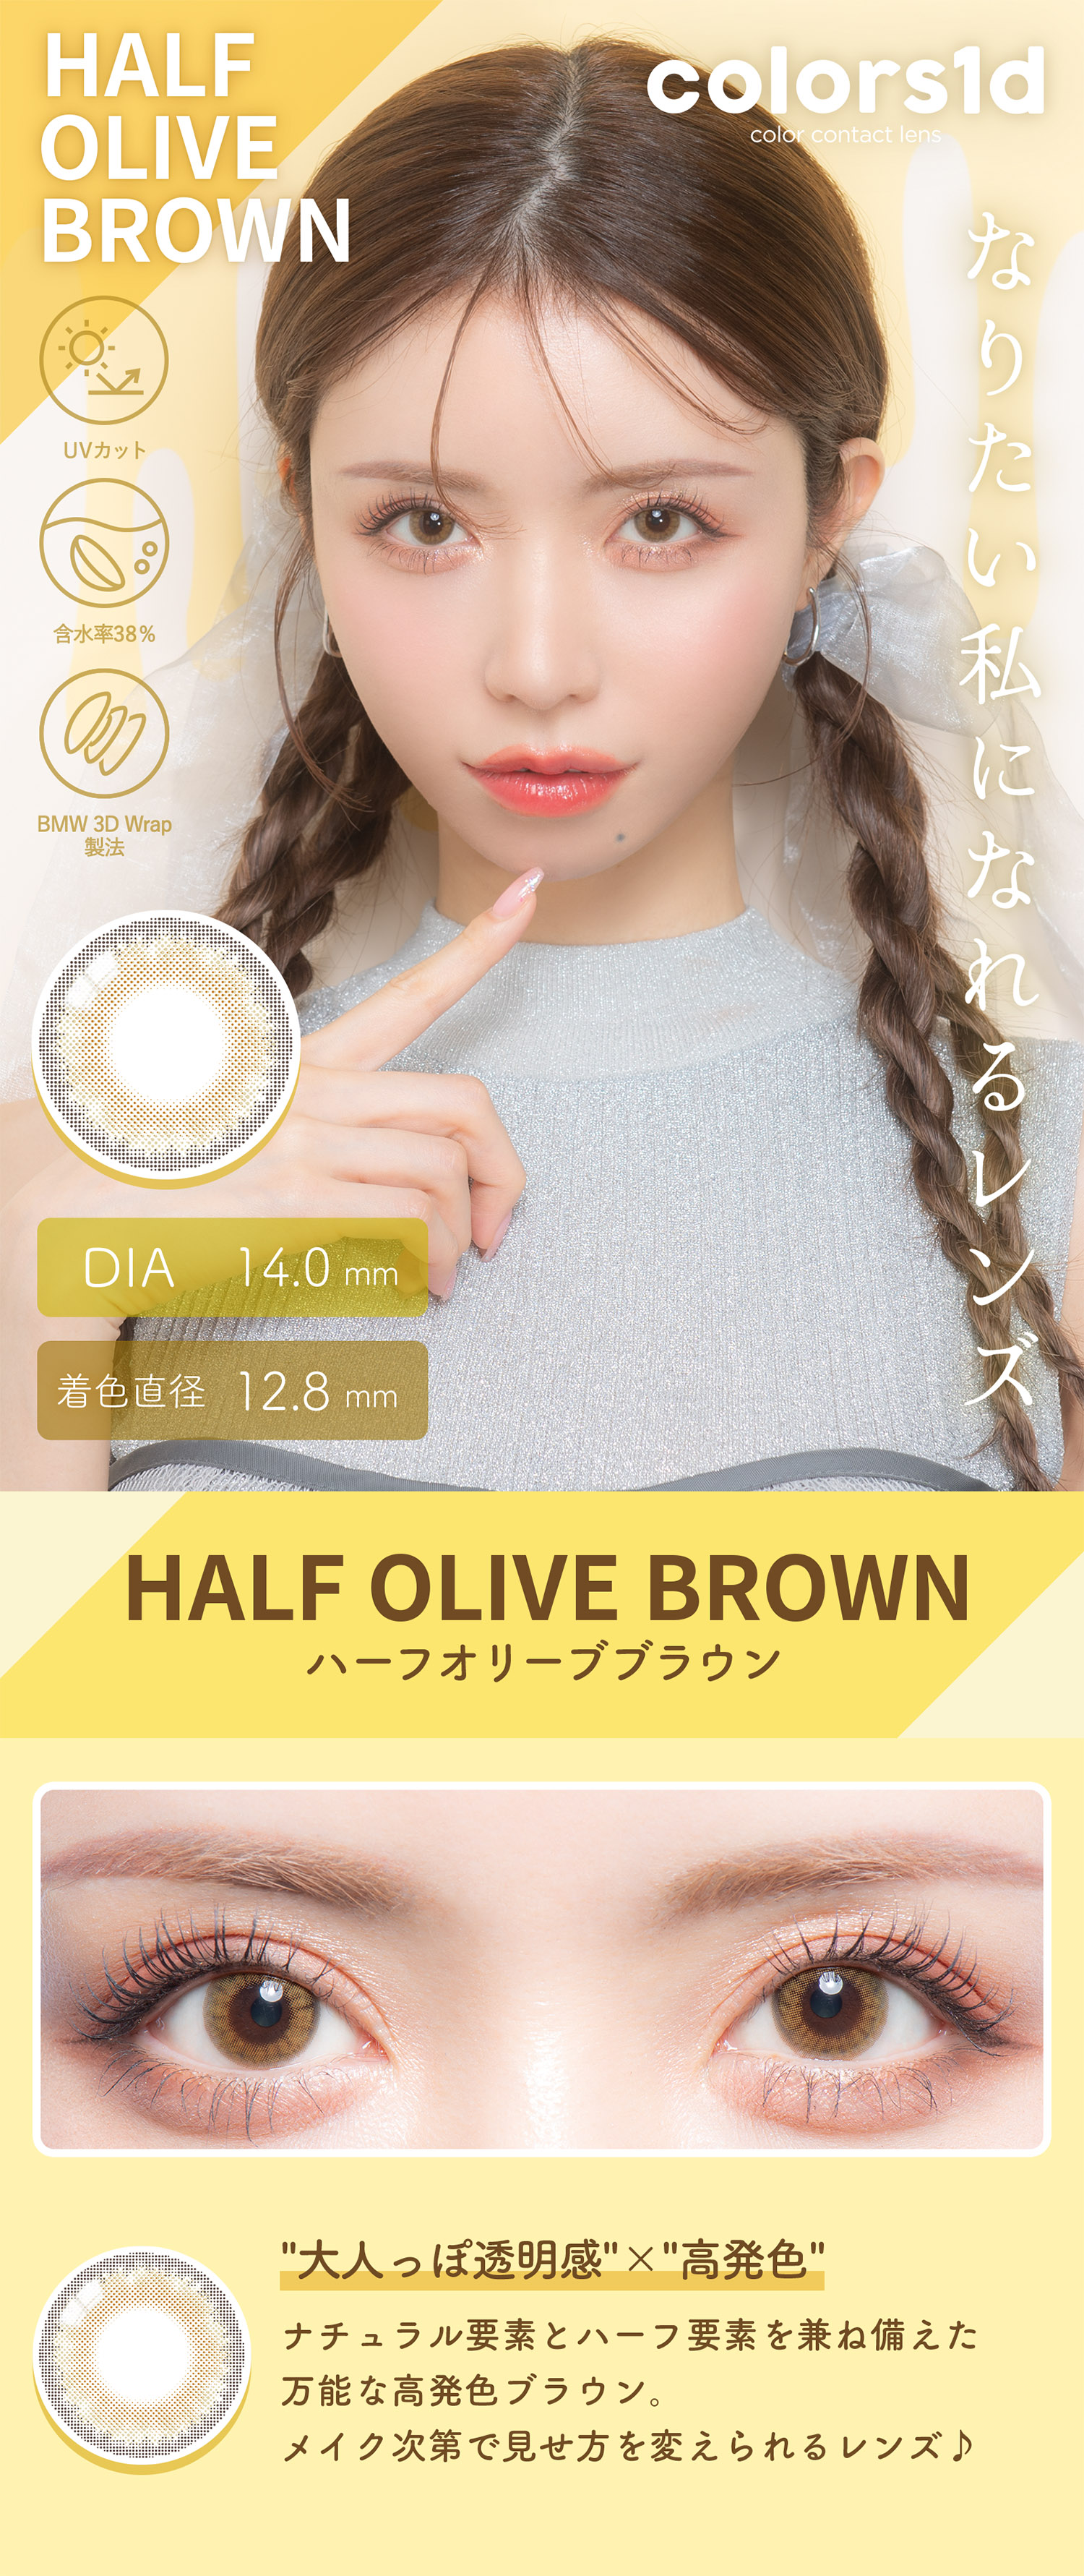 Colors(カラーズ)ハーフオリーブブラウン-Half Olive Brown【度あり/度なし• ワンデー • DIA14.0】